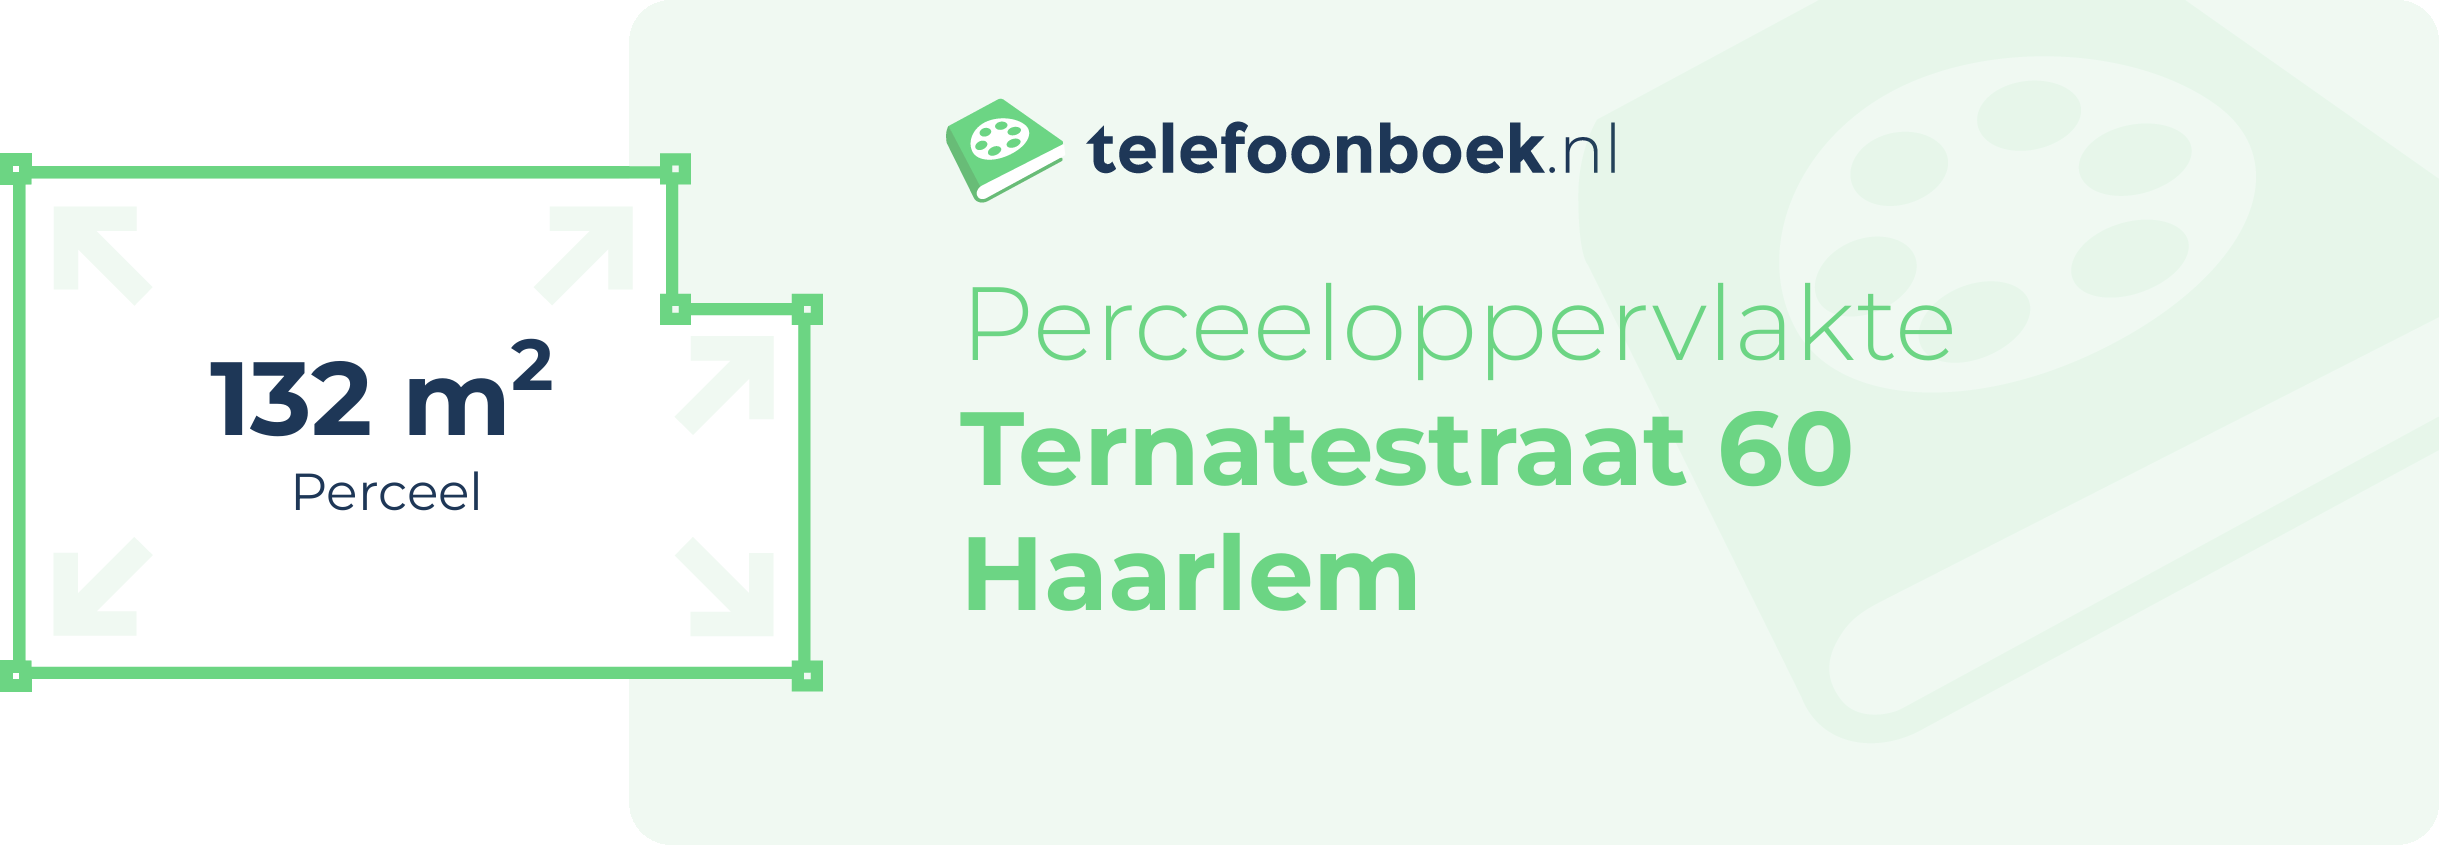 Perceeloppervlakte Ternatestraat 60 Haarlem